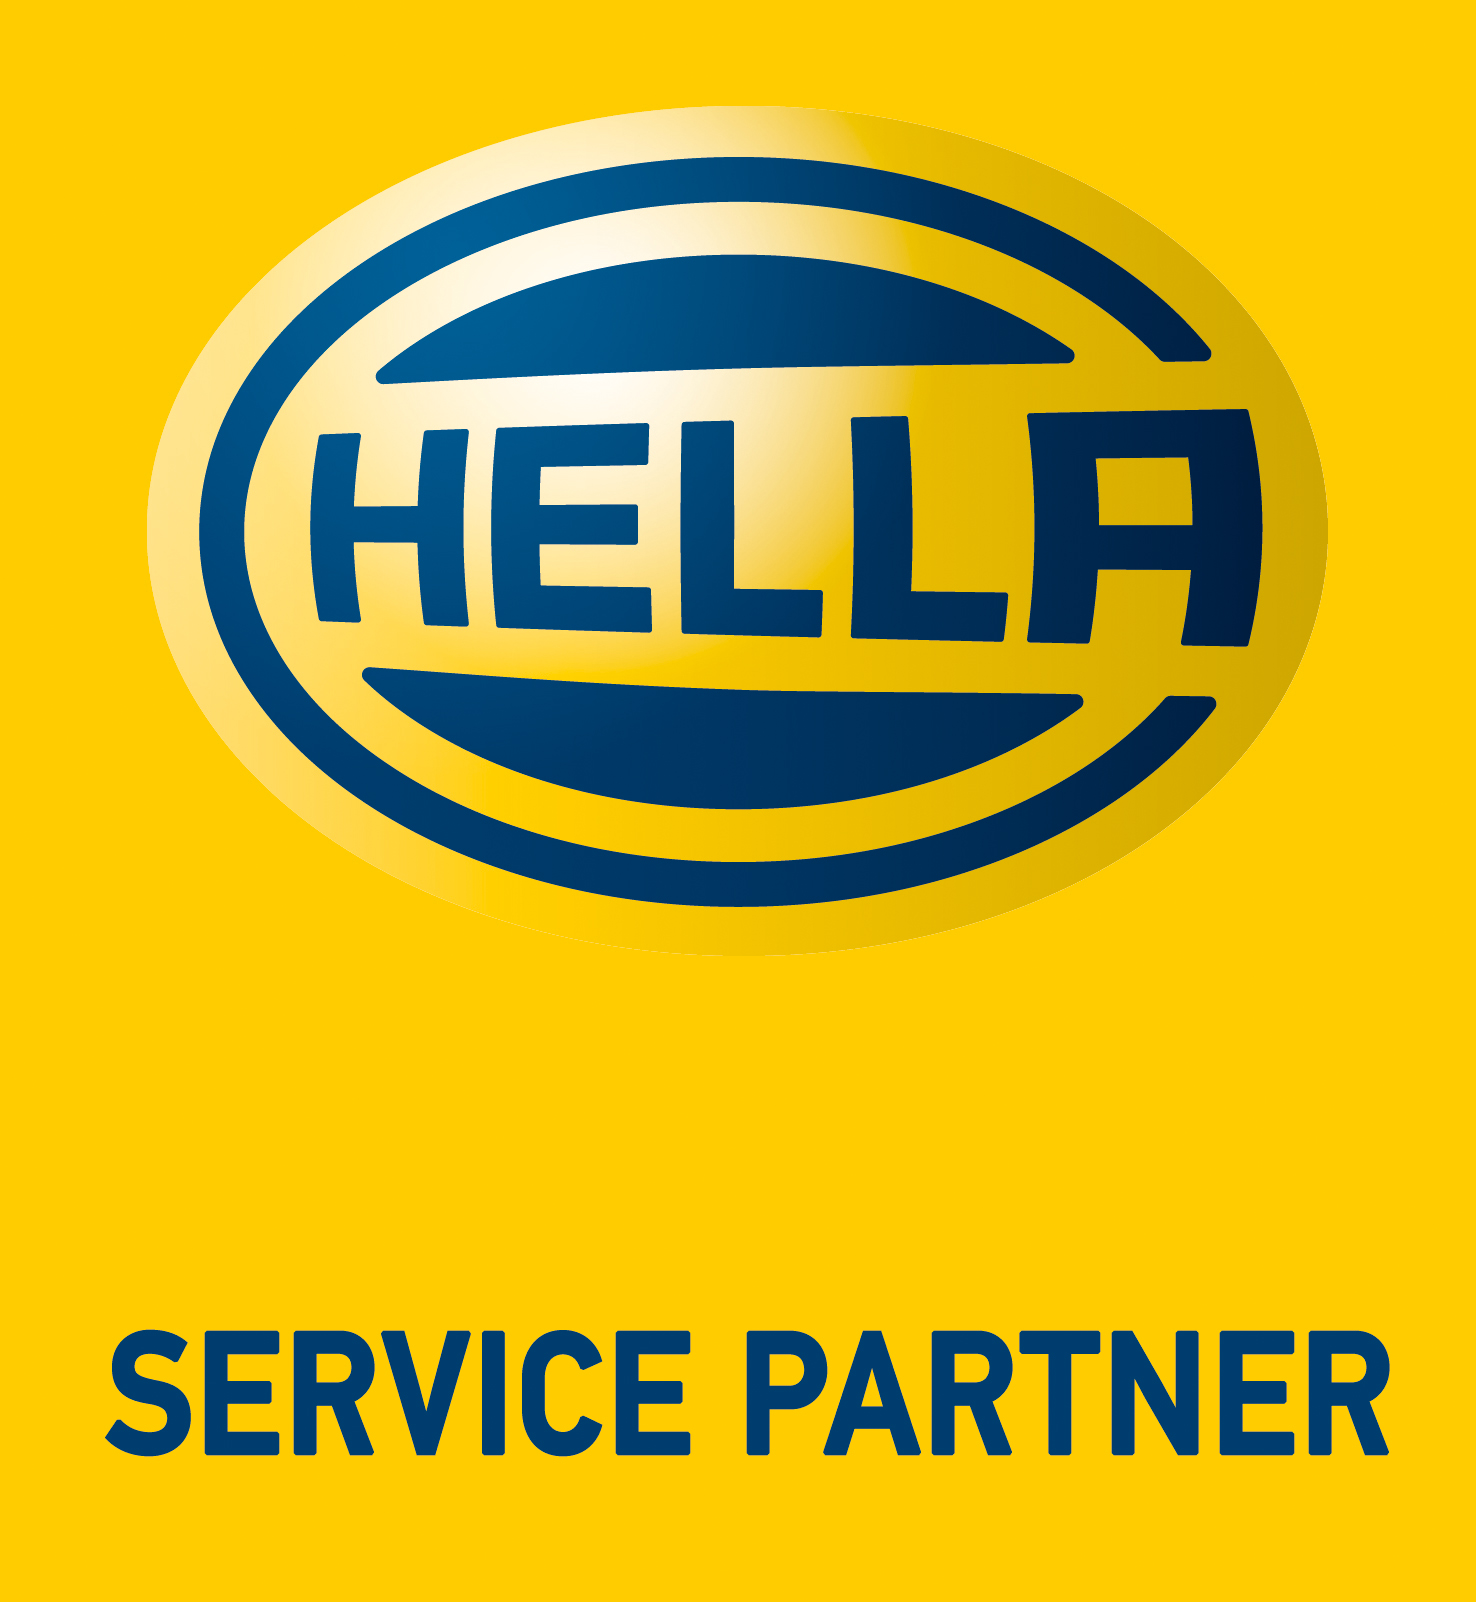 Vejrup Auto - Hella Service Partner logo